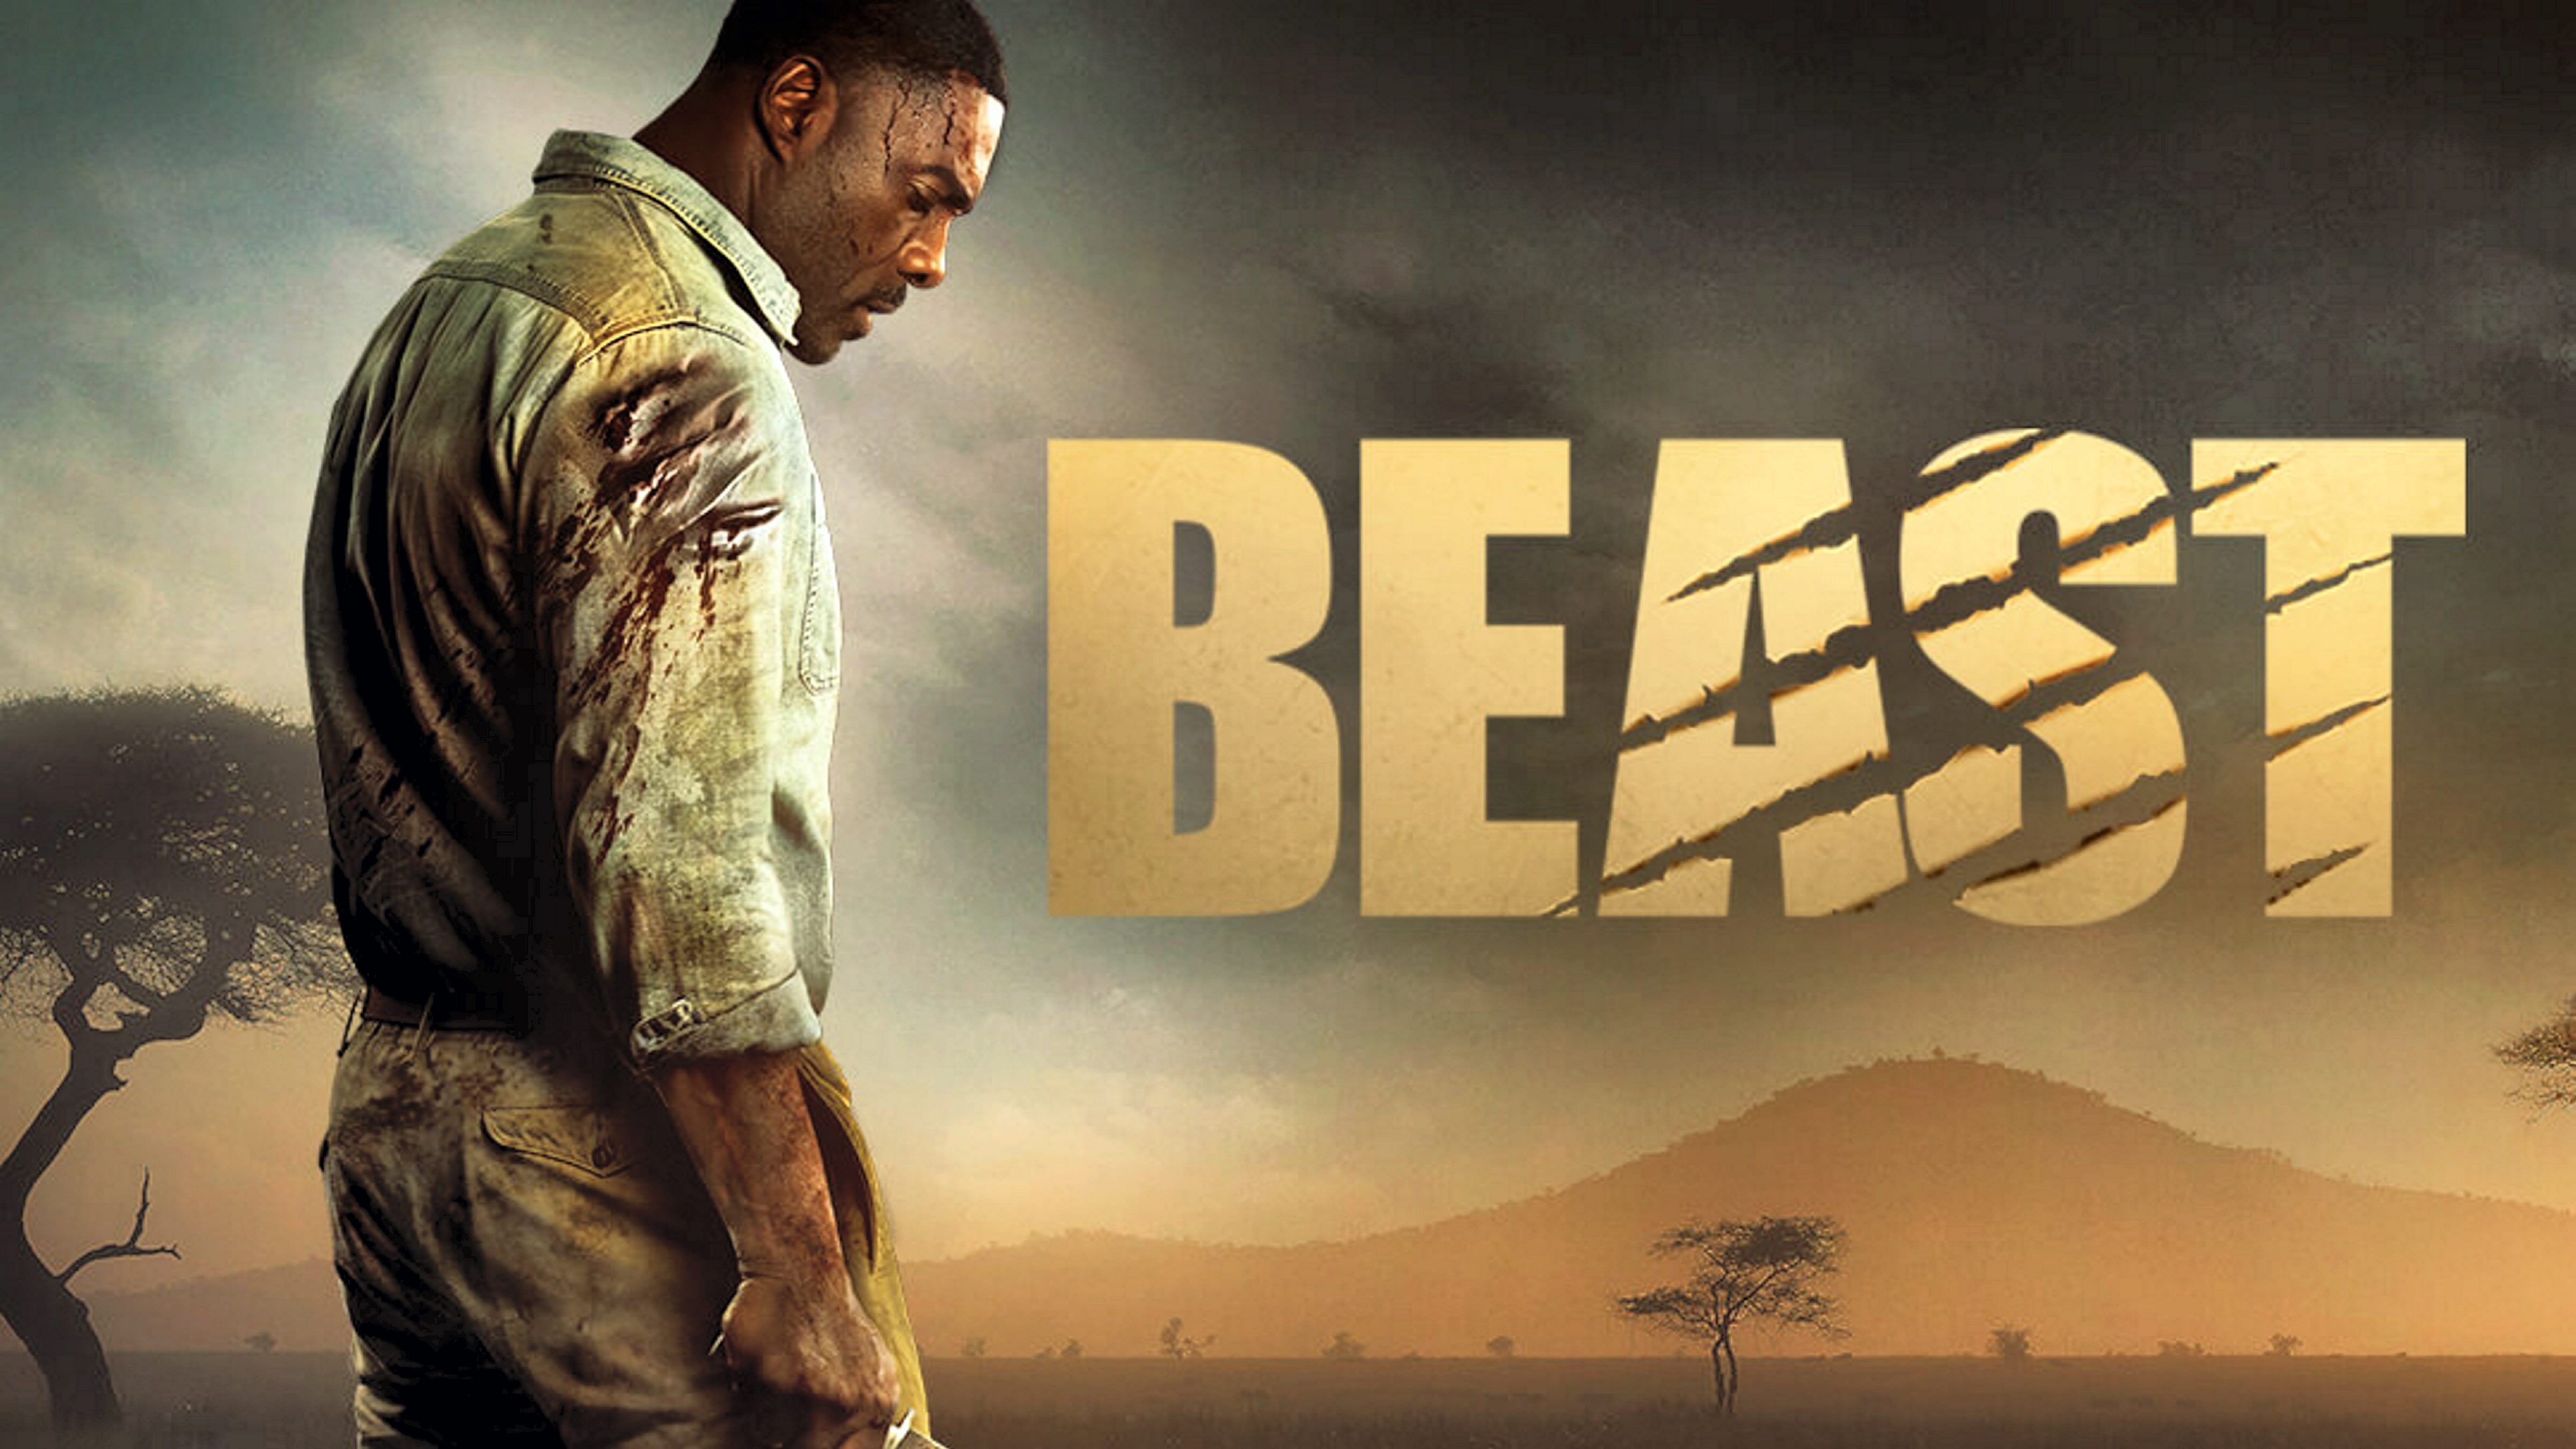 Poster of Hollywood movie 'Beast', starring actor Idris Elba. Credit: PTI Photo